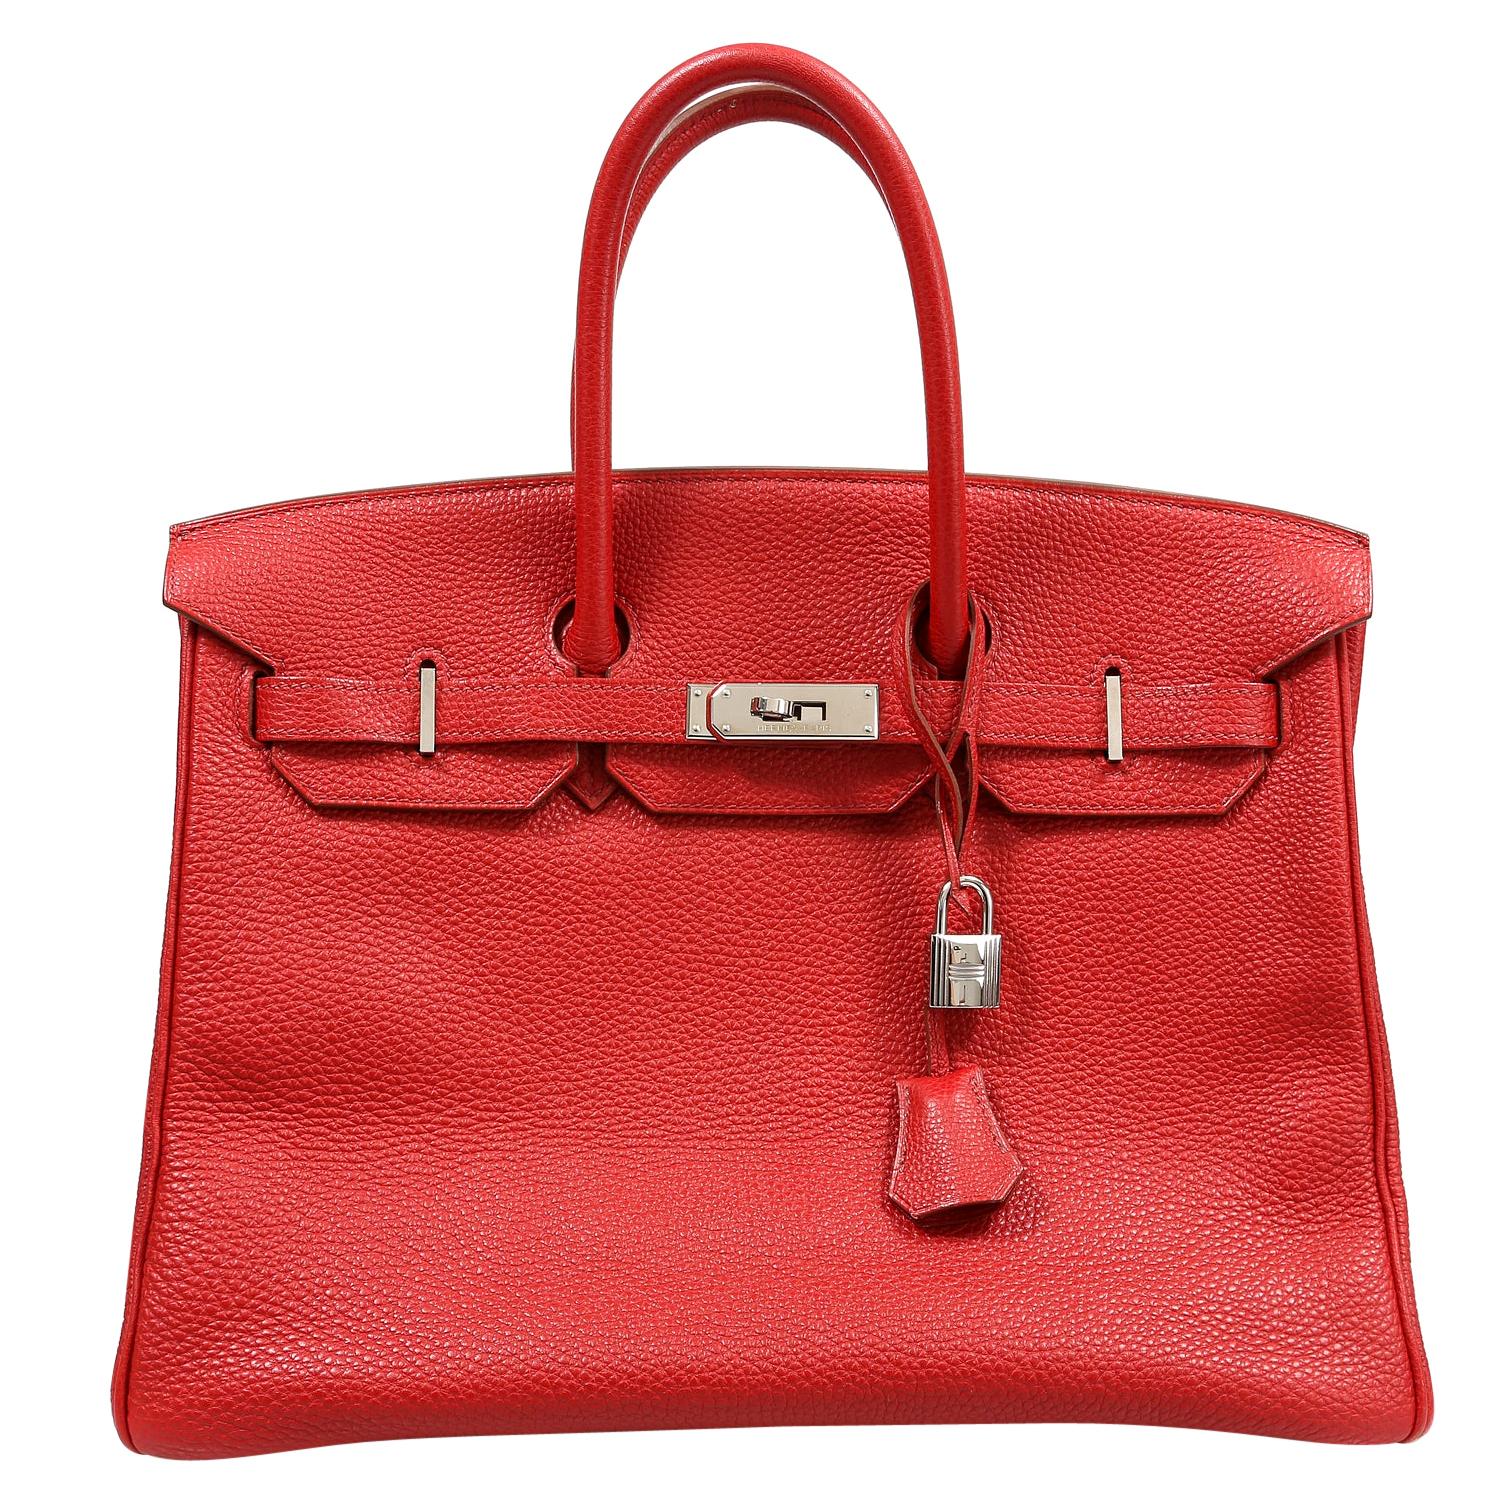 Hermès Red Togo 35 cm Birkin Bag